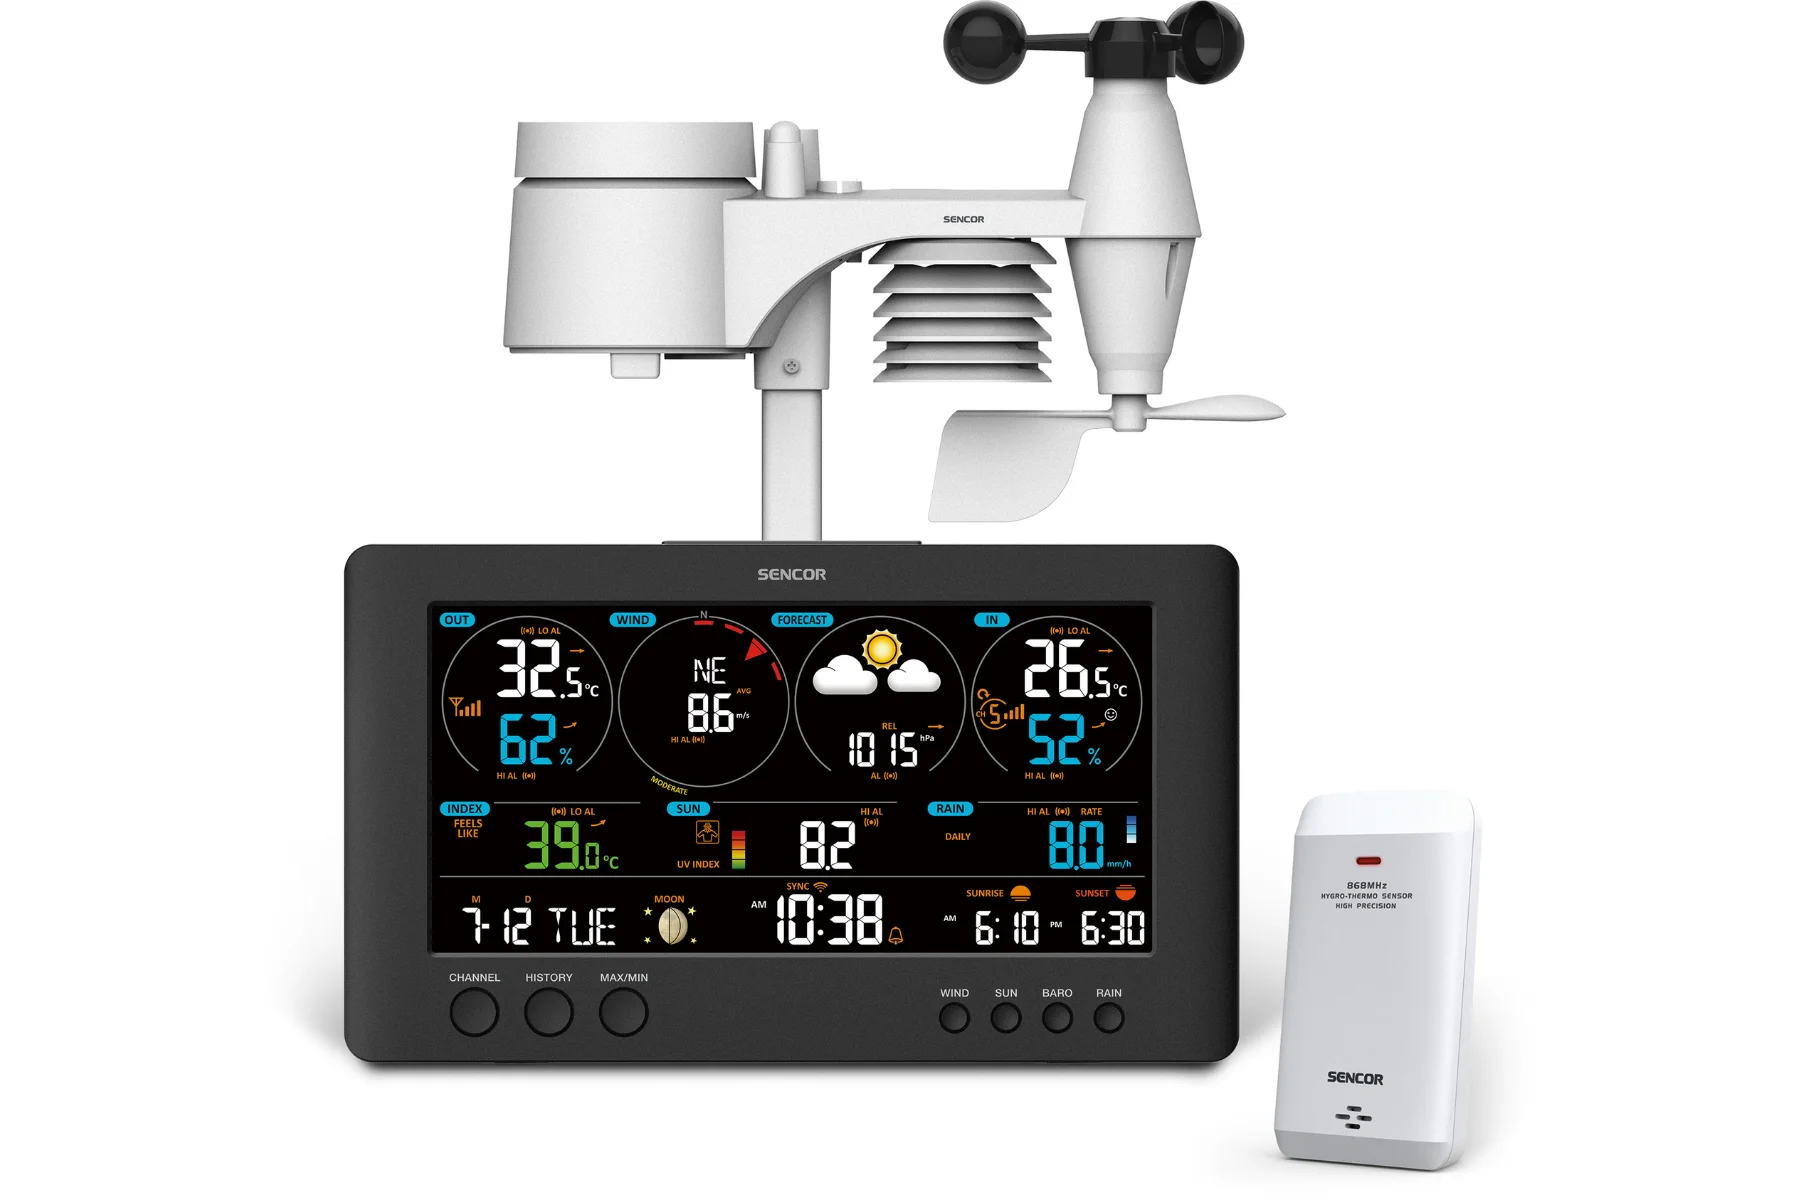 WiFi profesionálna meteorologická stanica Sencor SWS 12500s merania funkcie